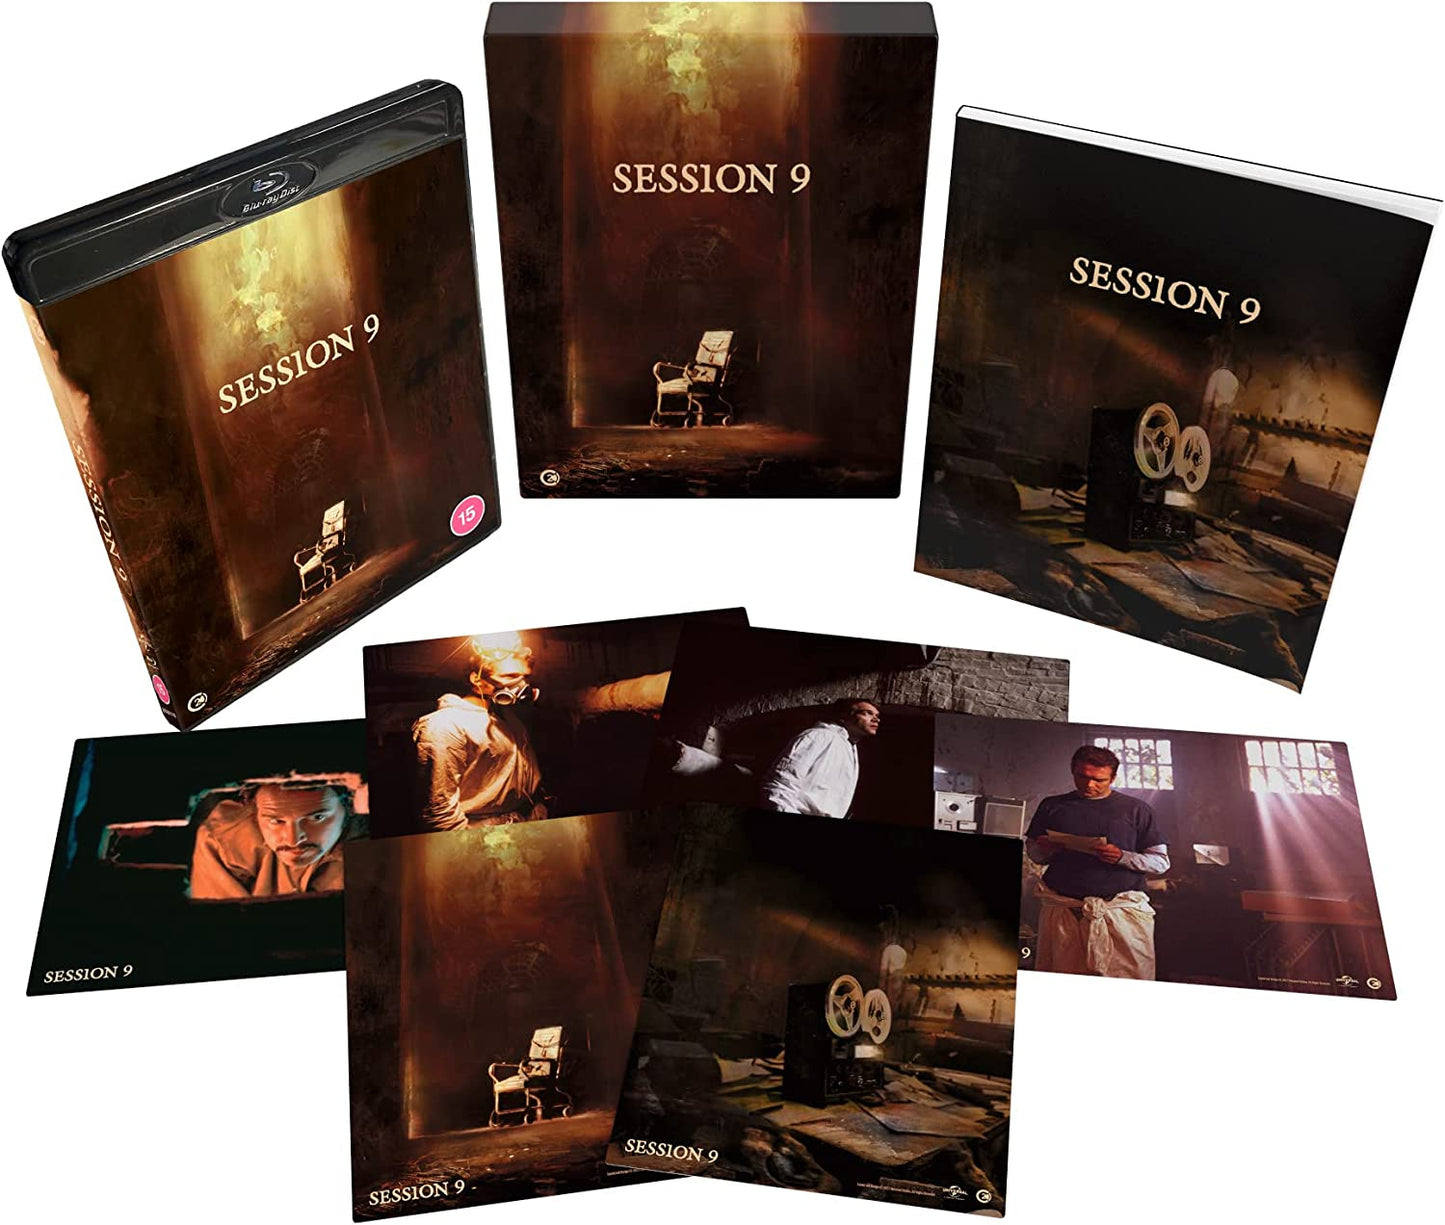 Session 9 Limited Edition Blu-ray (Second Sight/Region B)